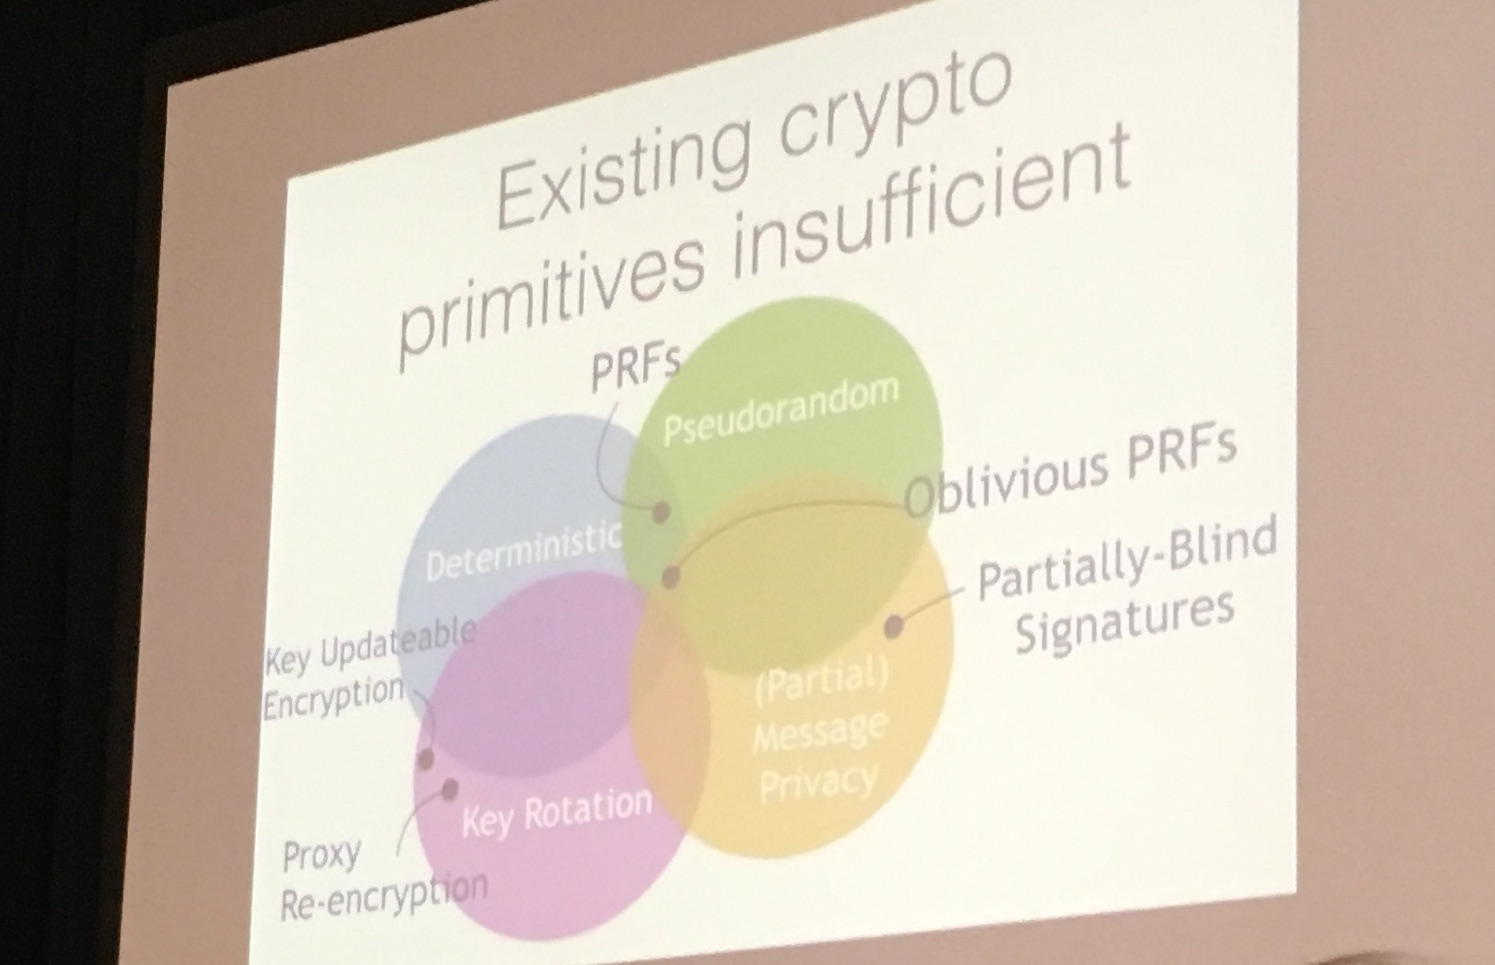 existing crypto primitives insufficient